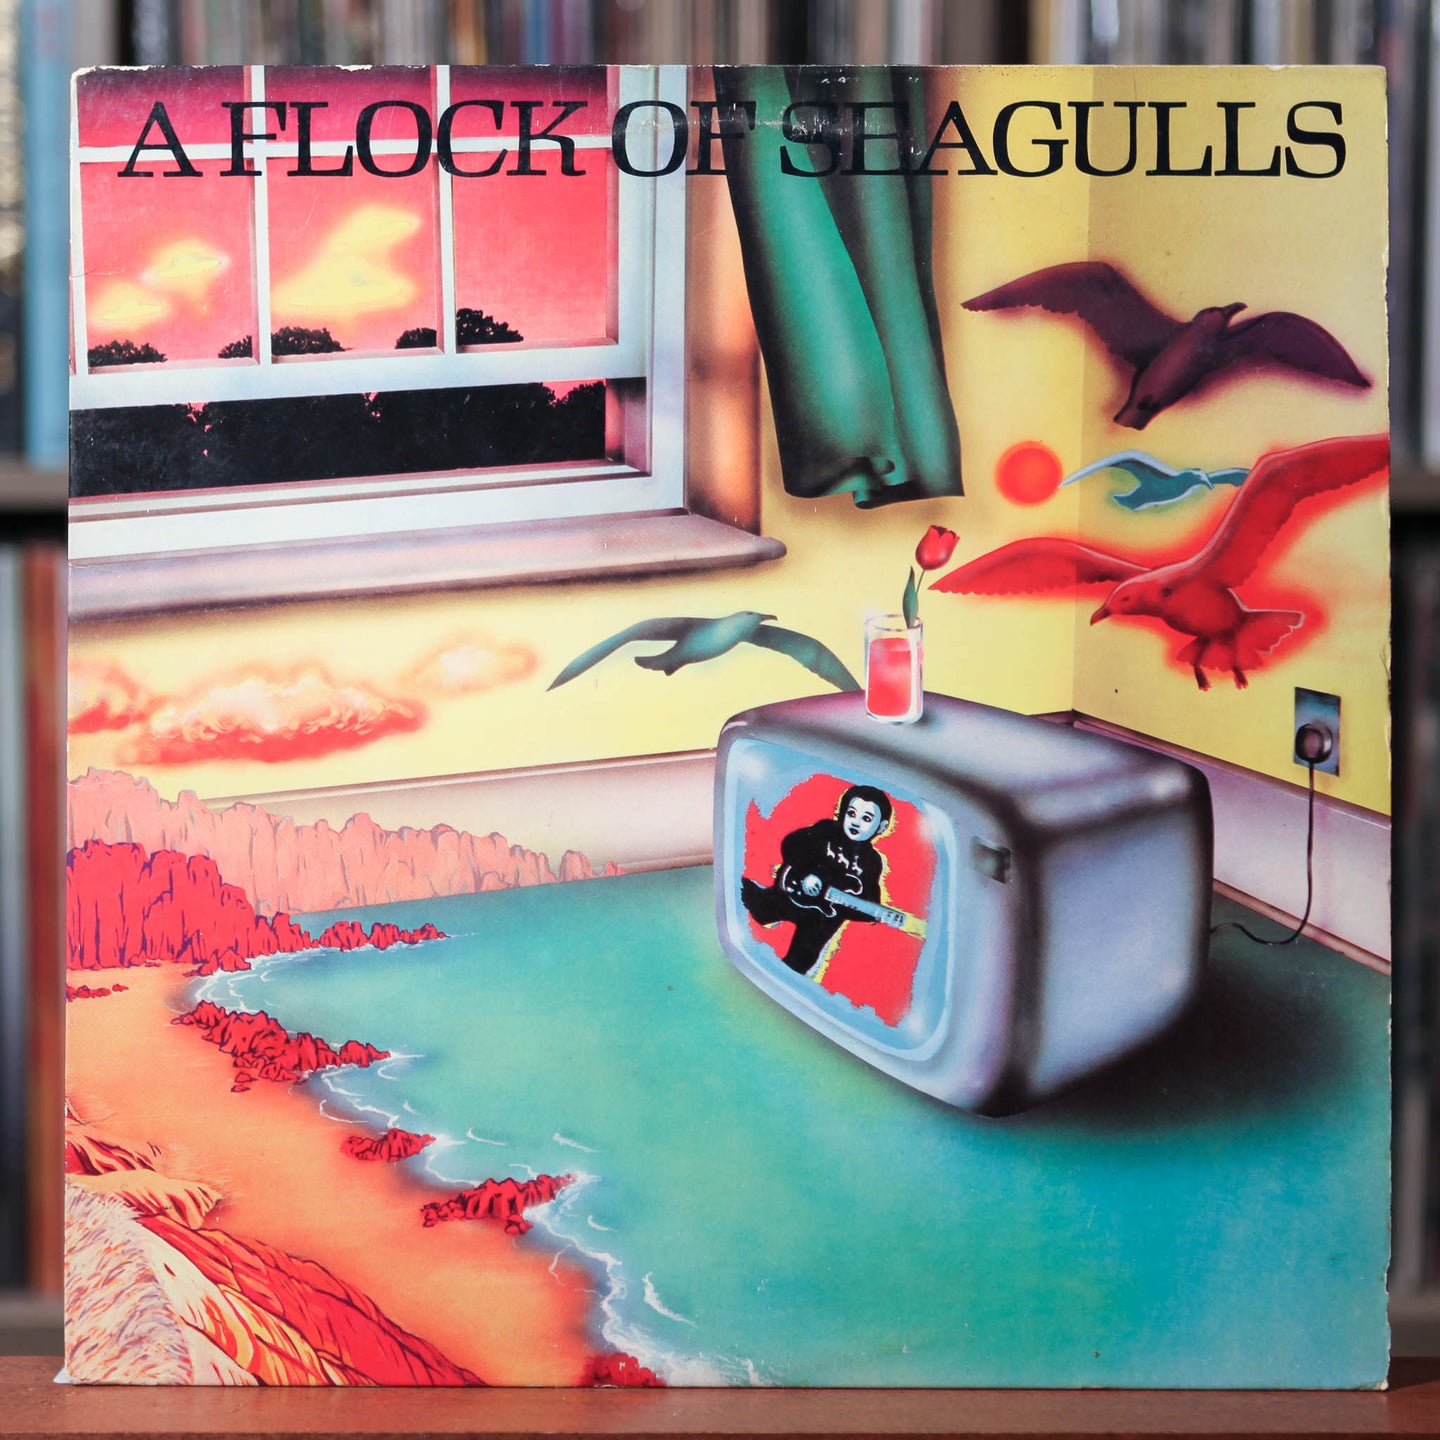 A Flock Of Seagulls - Self-Titled - 1982 Arista, VG/VG+